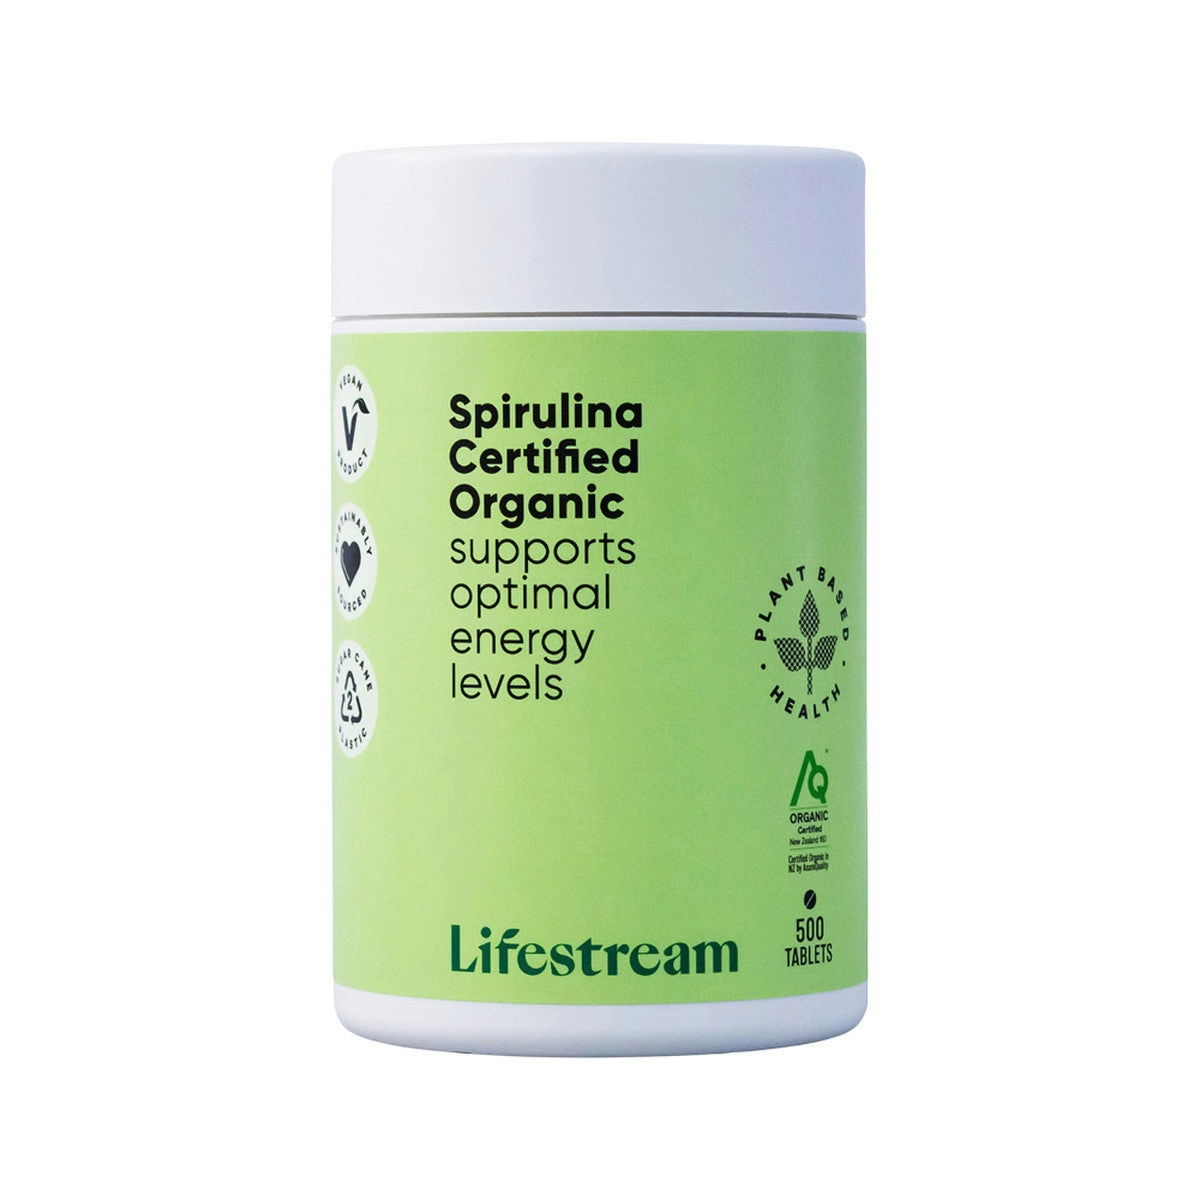 image of Lifestream Spirulina Certified Organic 500t on white background